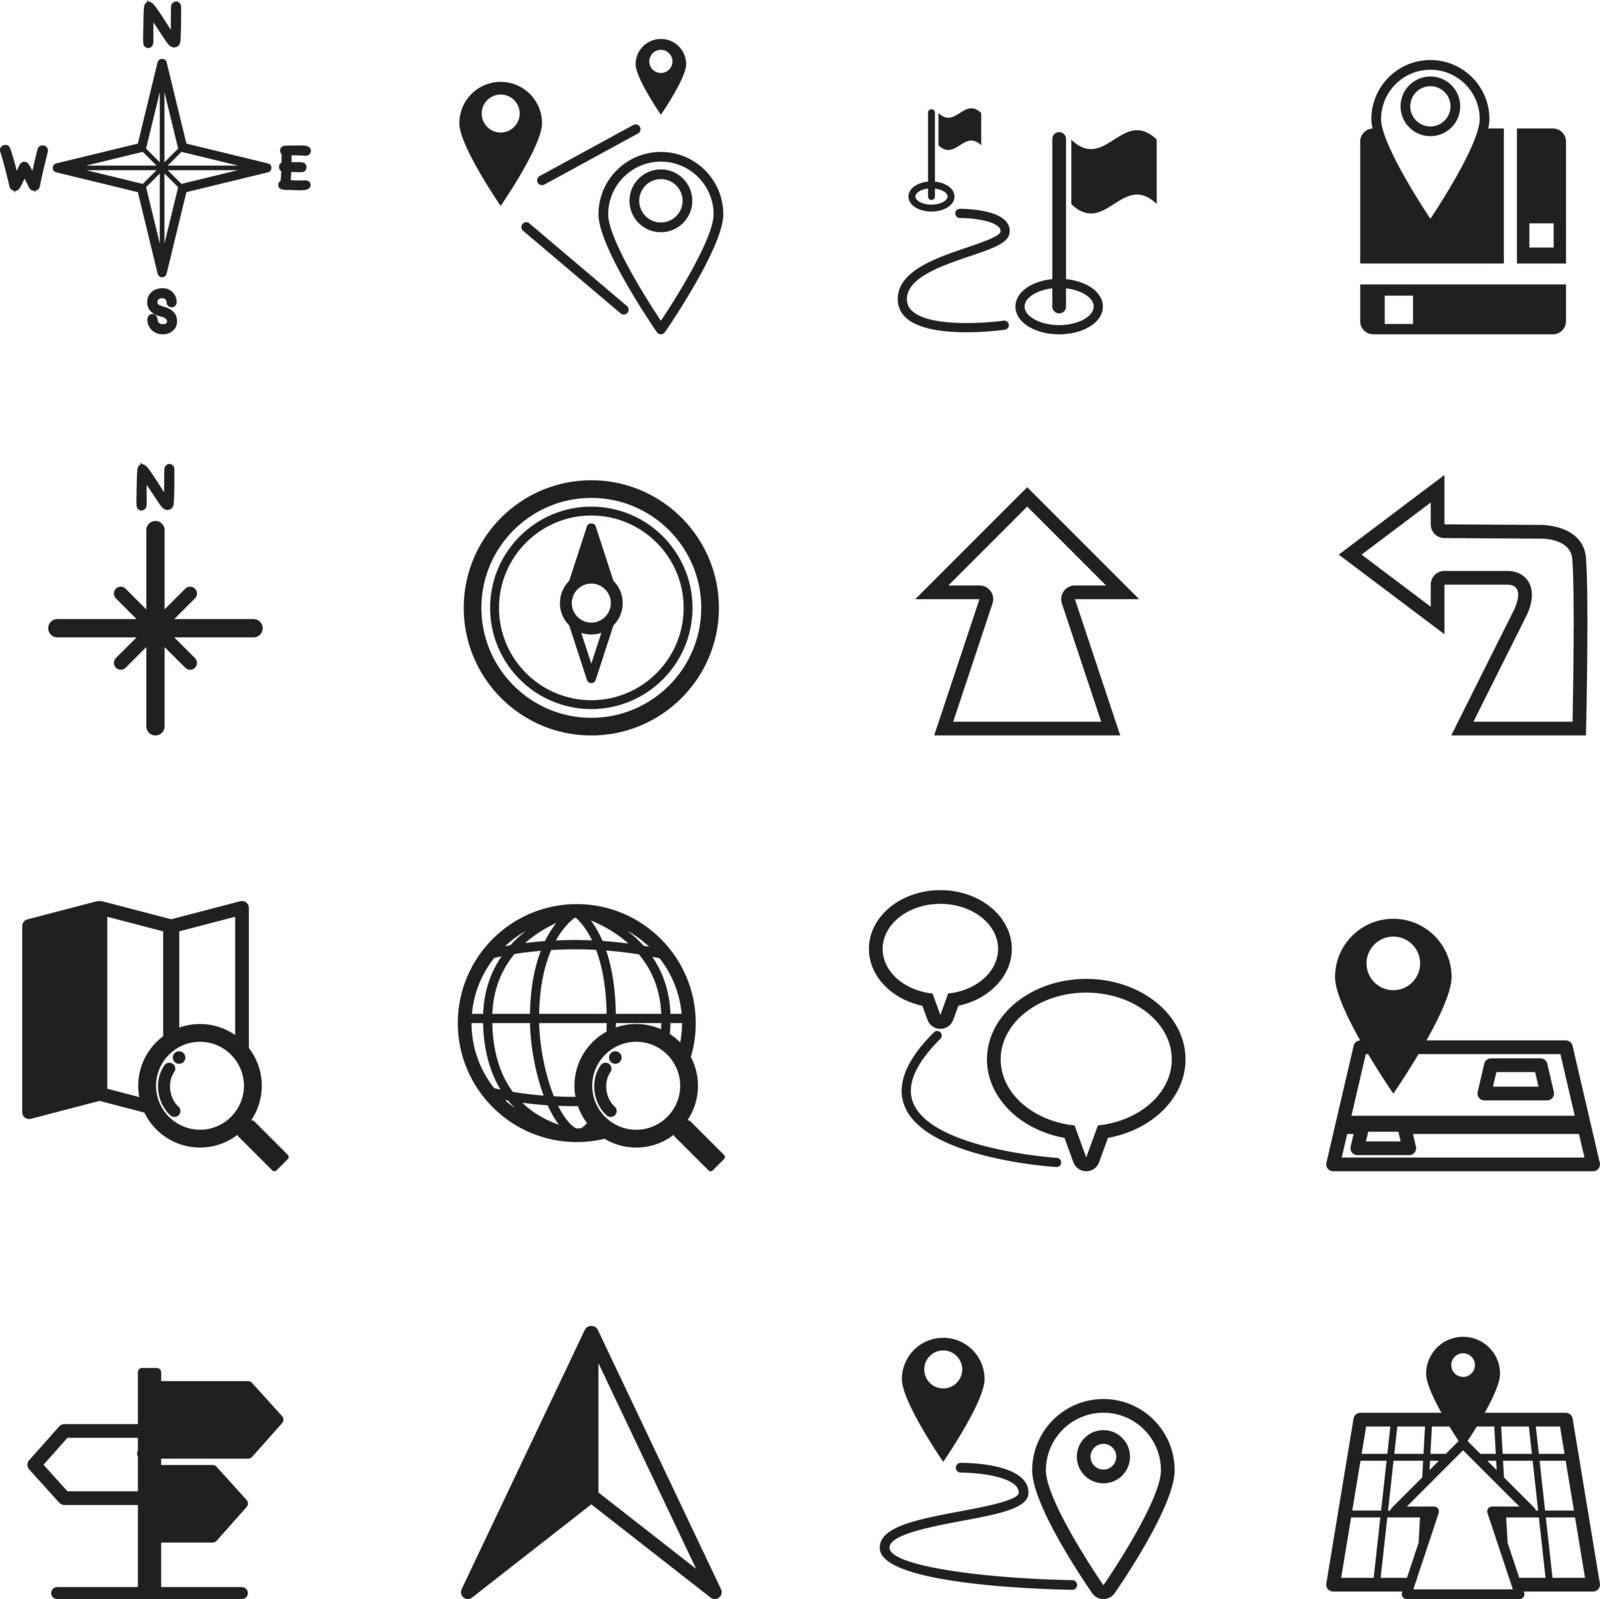 Navigation icons set by Puckung